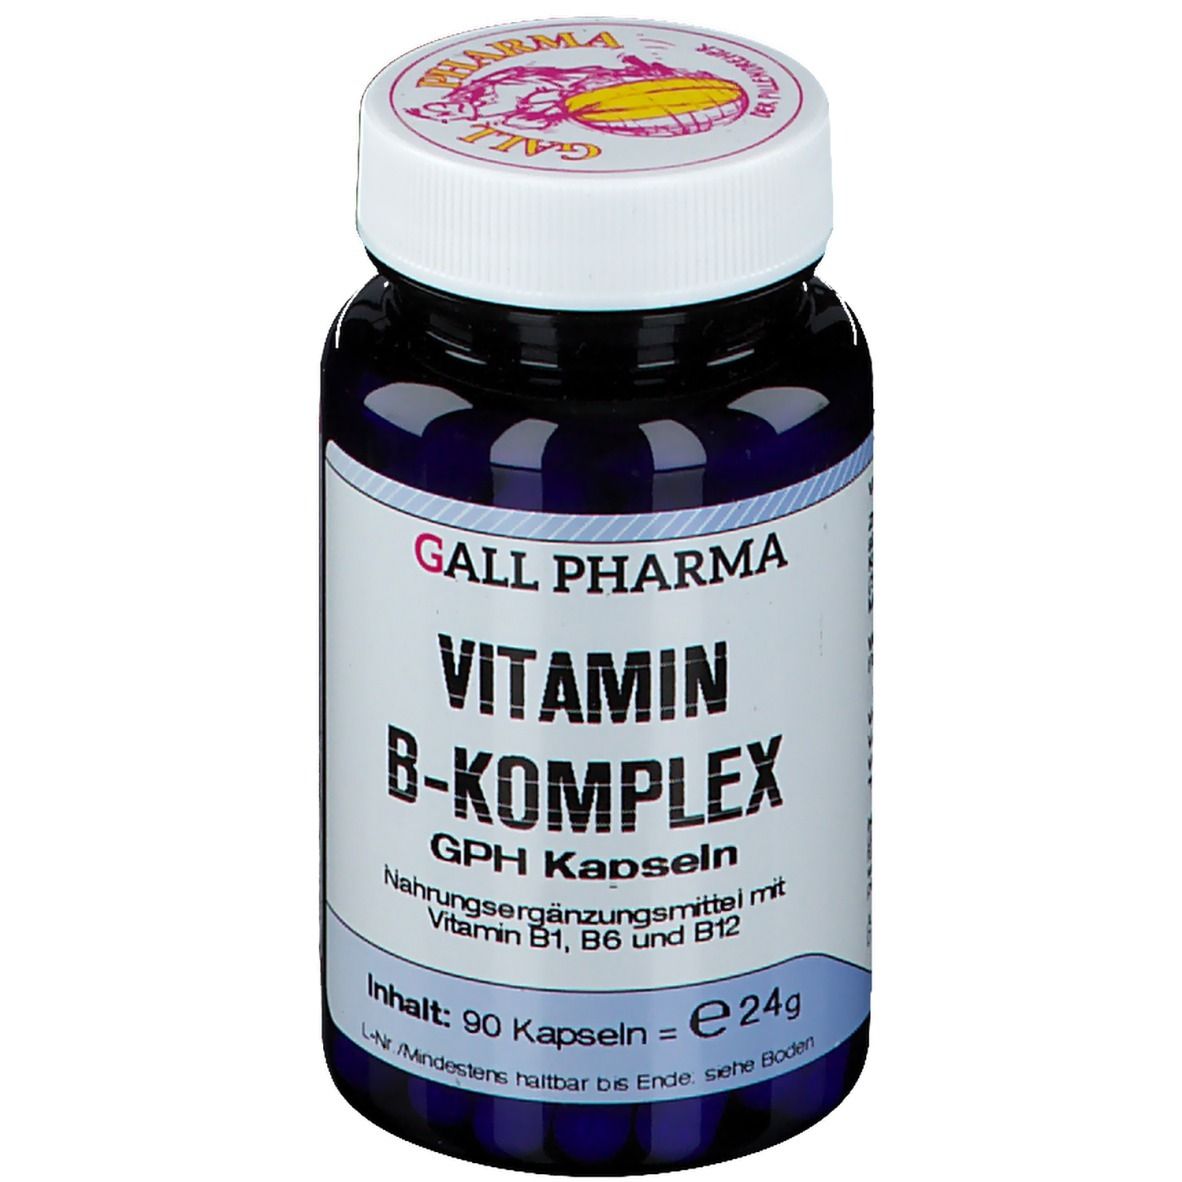 GALL PHARMA Vitamin B-Komplex GPH